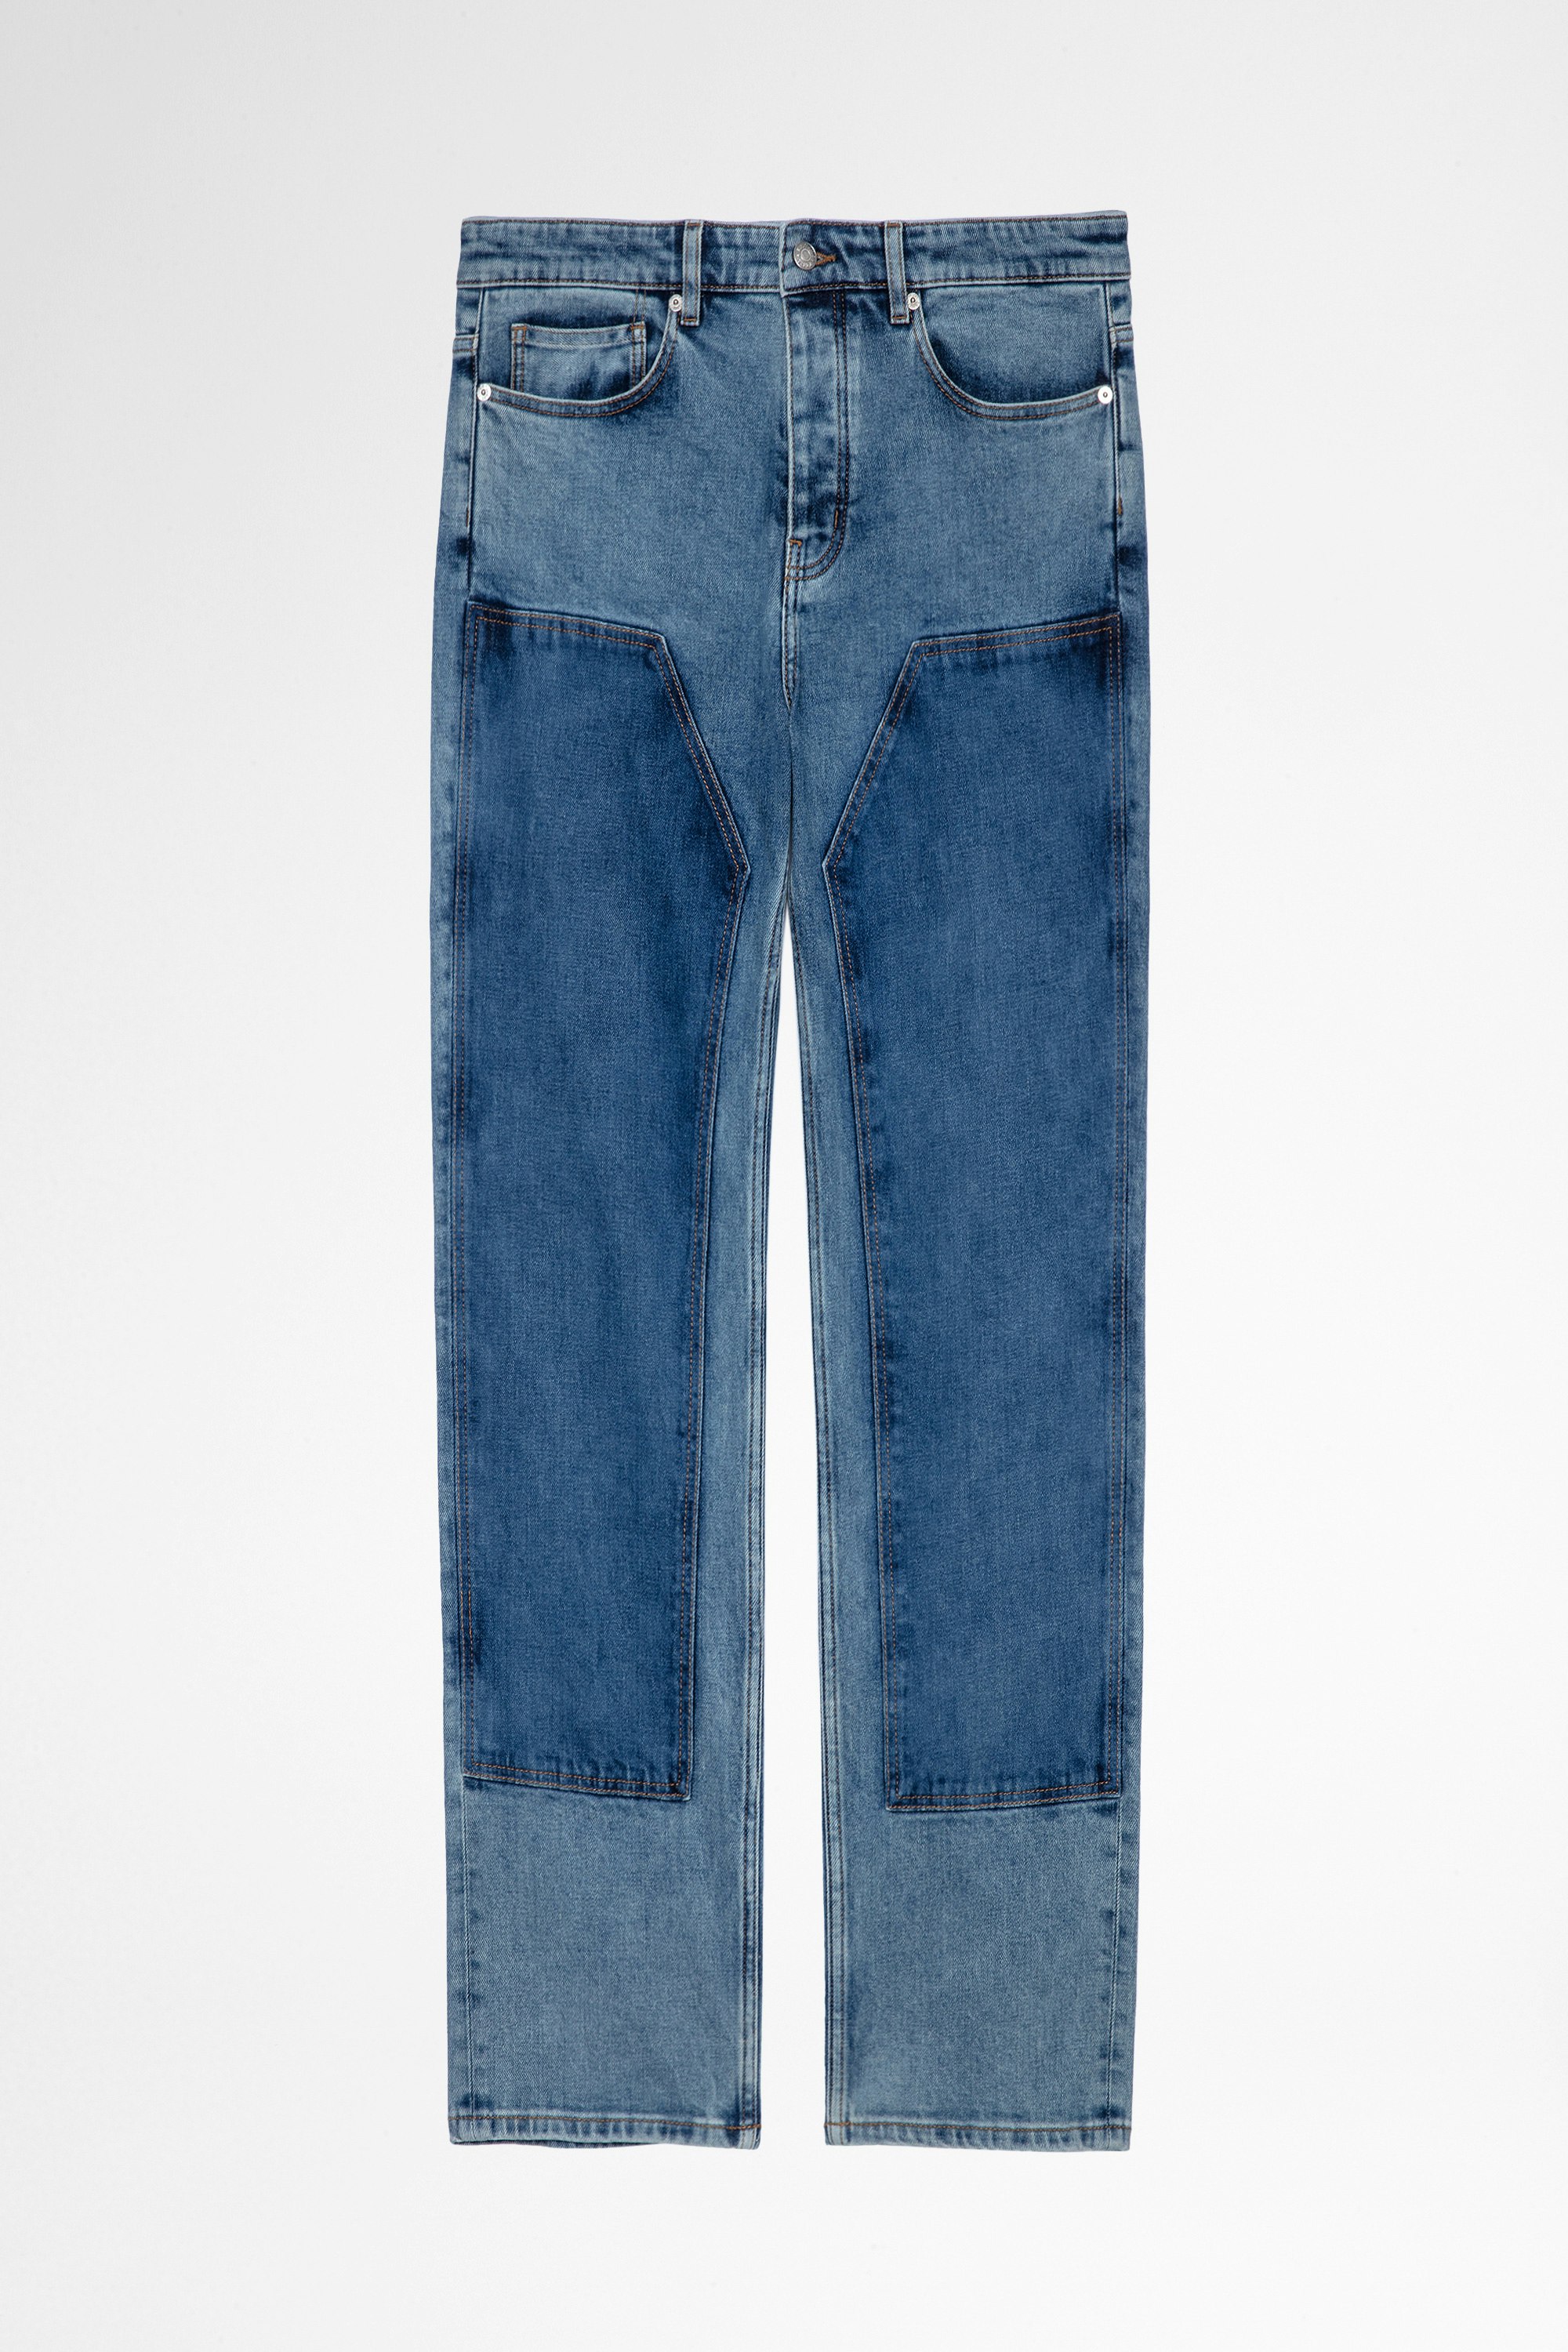 John Jeans Men's contrasting blue denim jeans